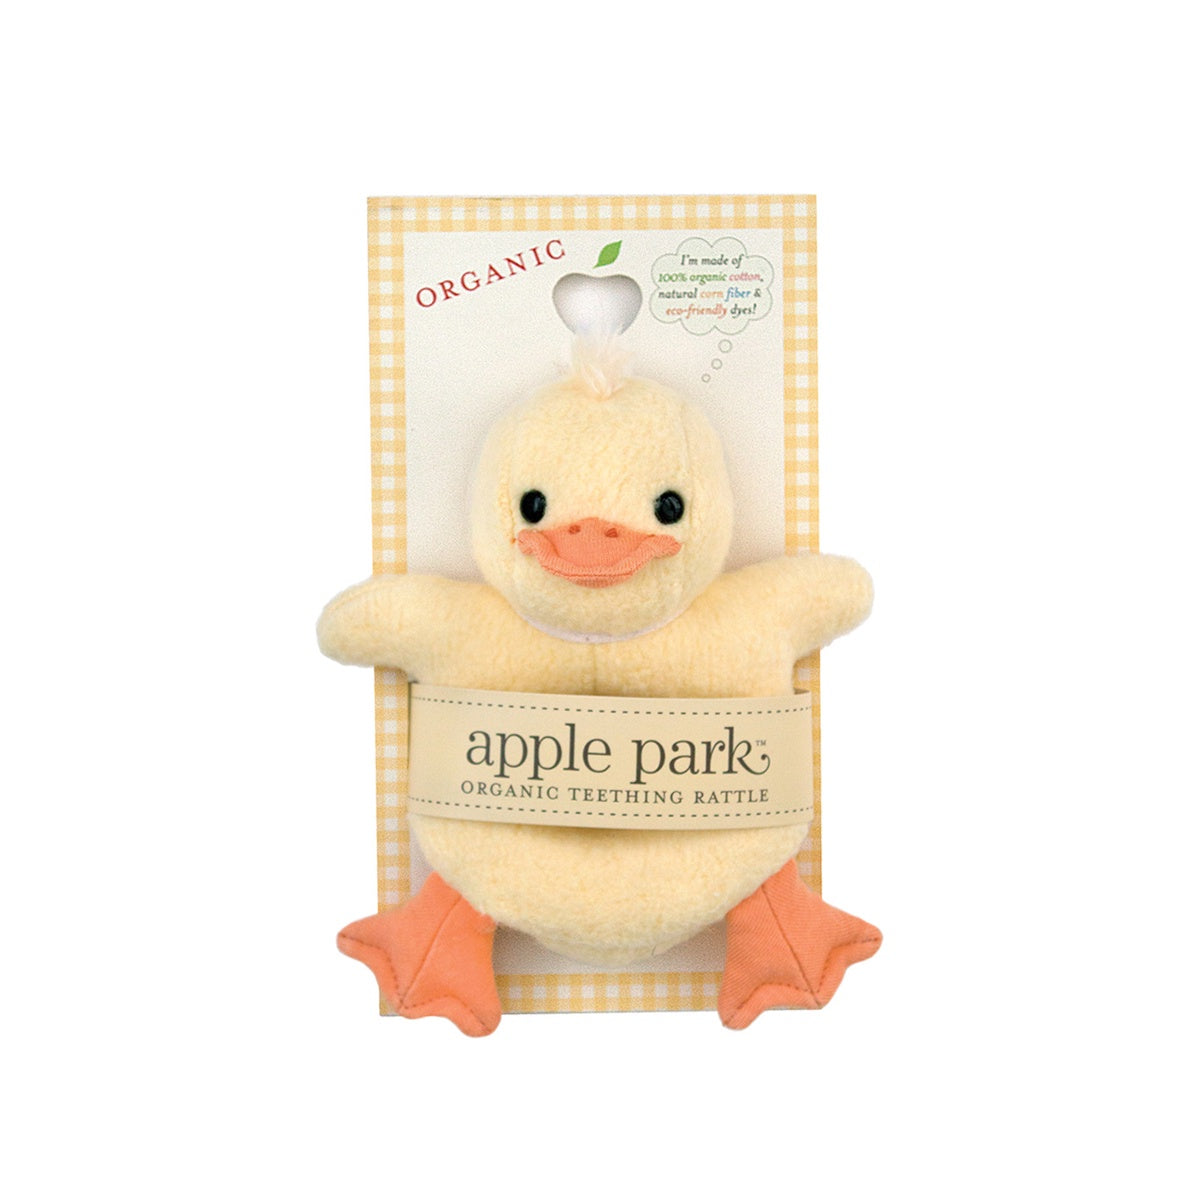 zzz Apple Park - Ducky Soft Rattle